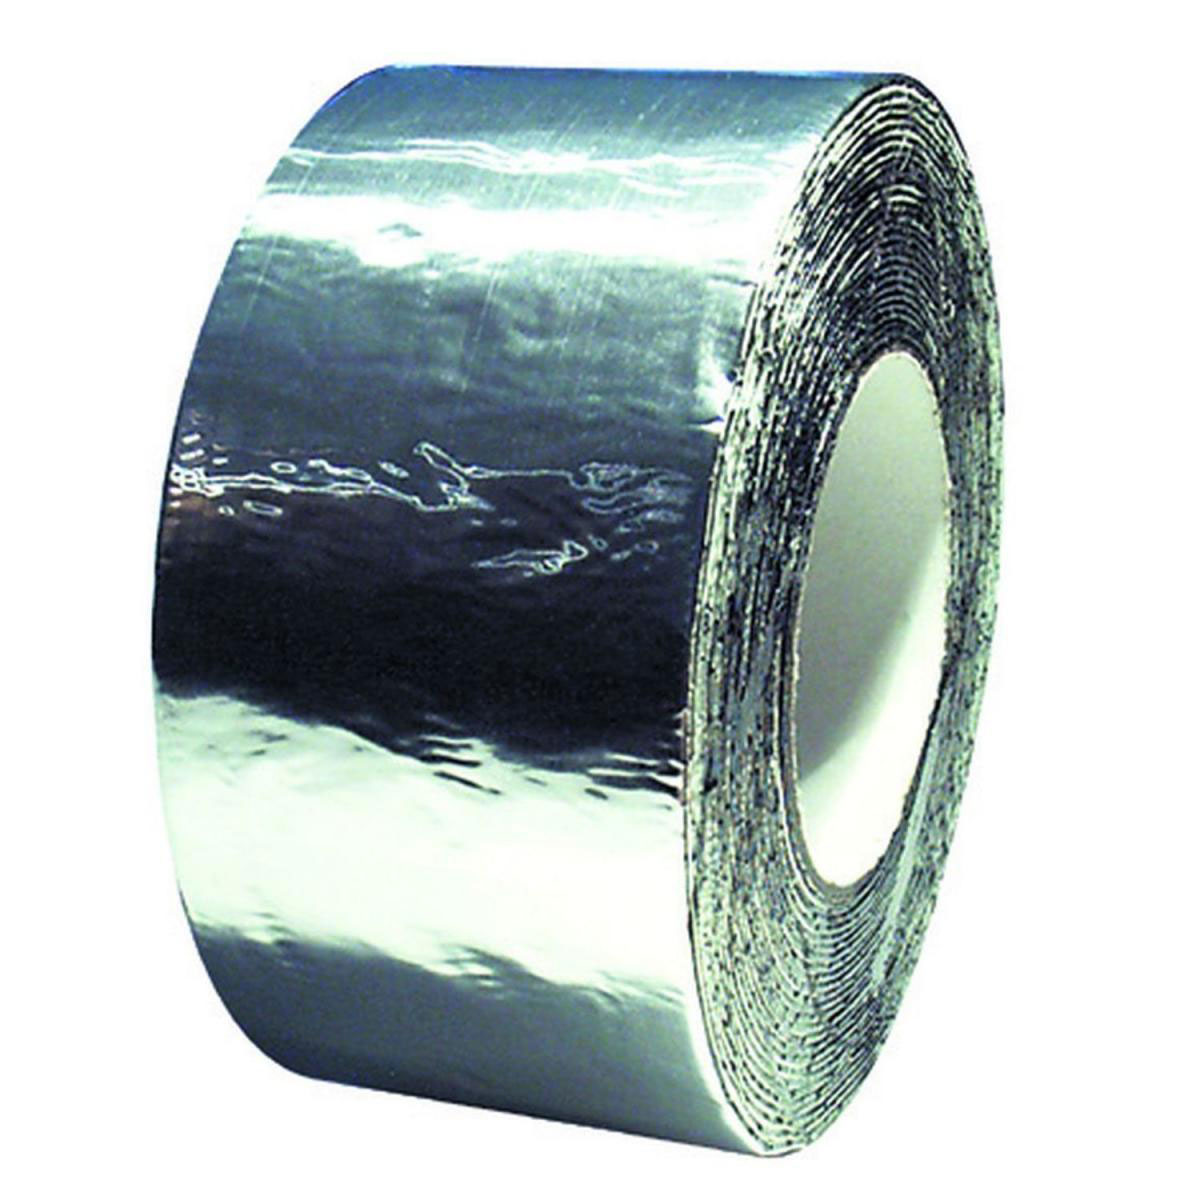 10m Onduline Dichtungsband Reparaturband Aluminium Blei 50mm breit  Bitumenband selbstklebend